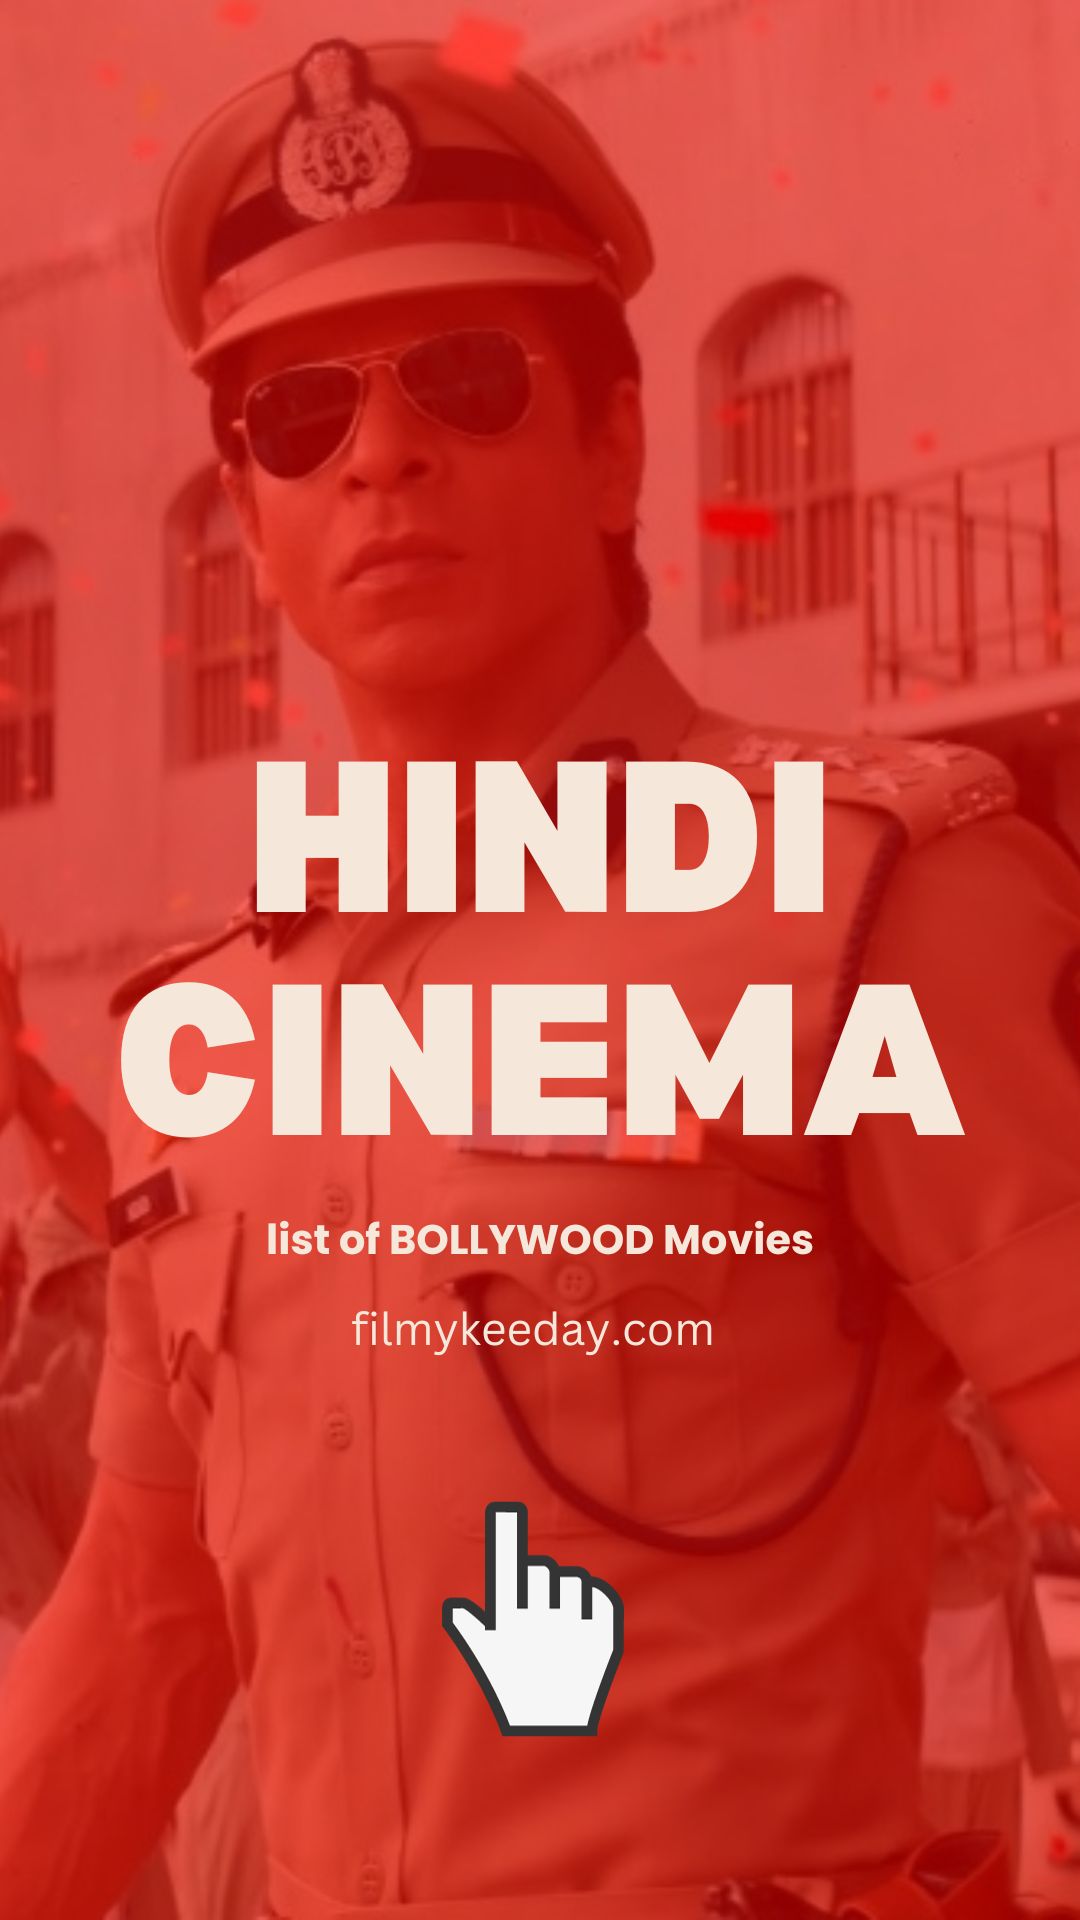 Best-movies-in-Hindi-cinema-list-1